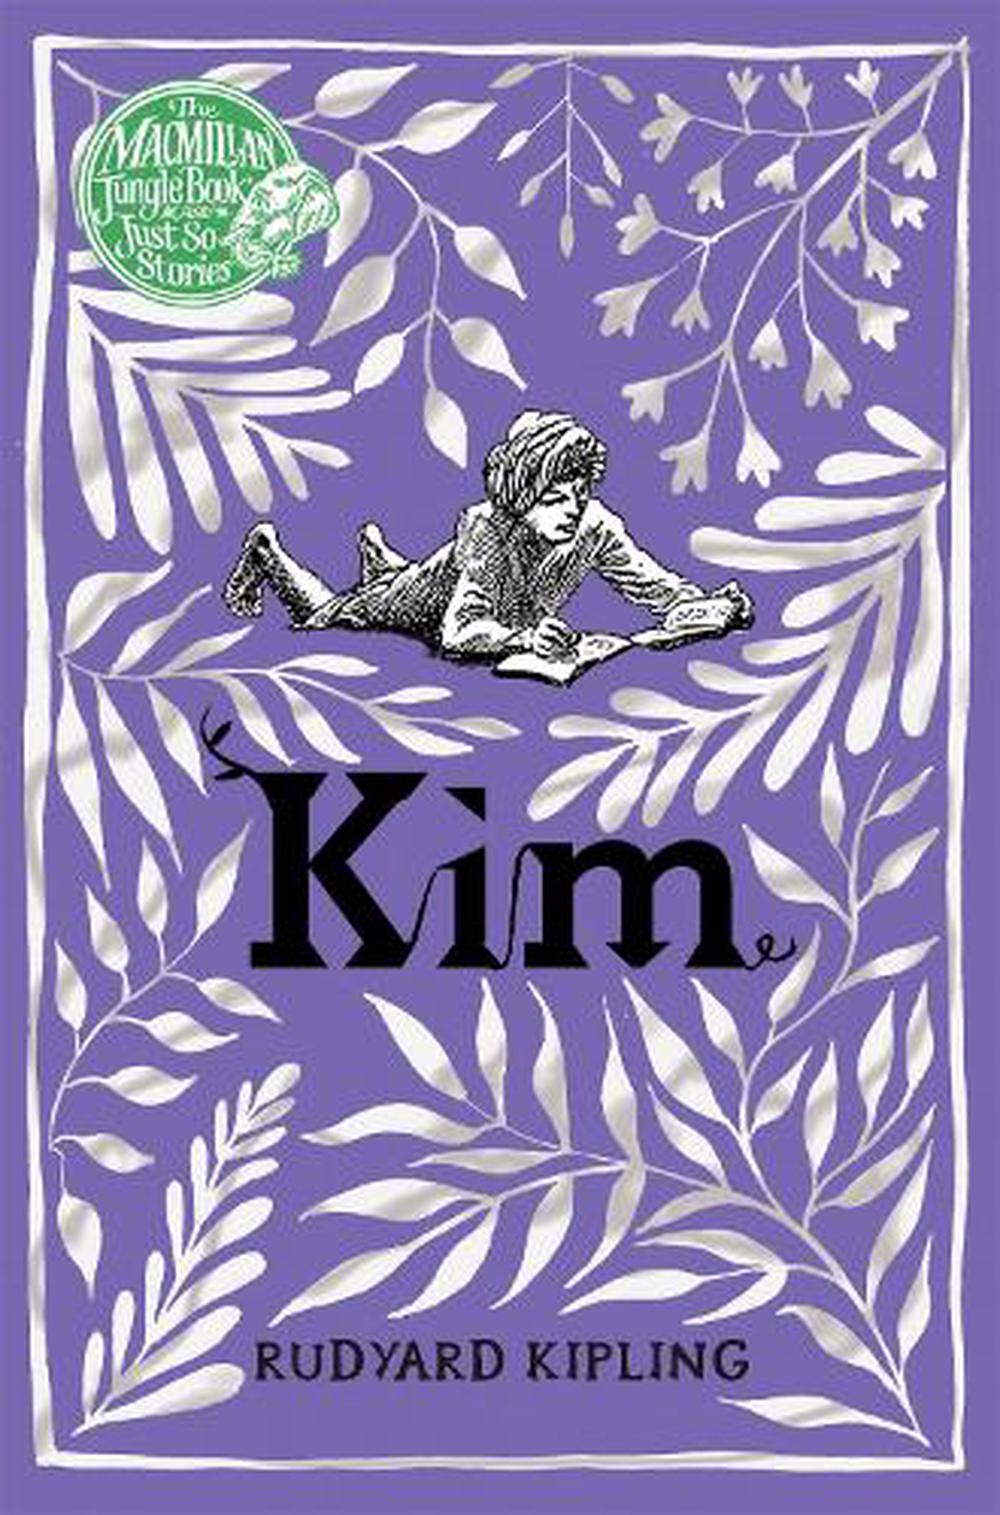 kim book by rudyard kipling